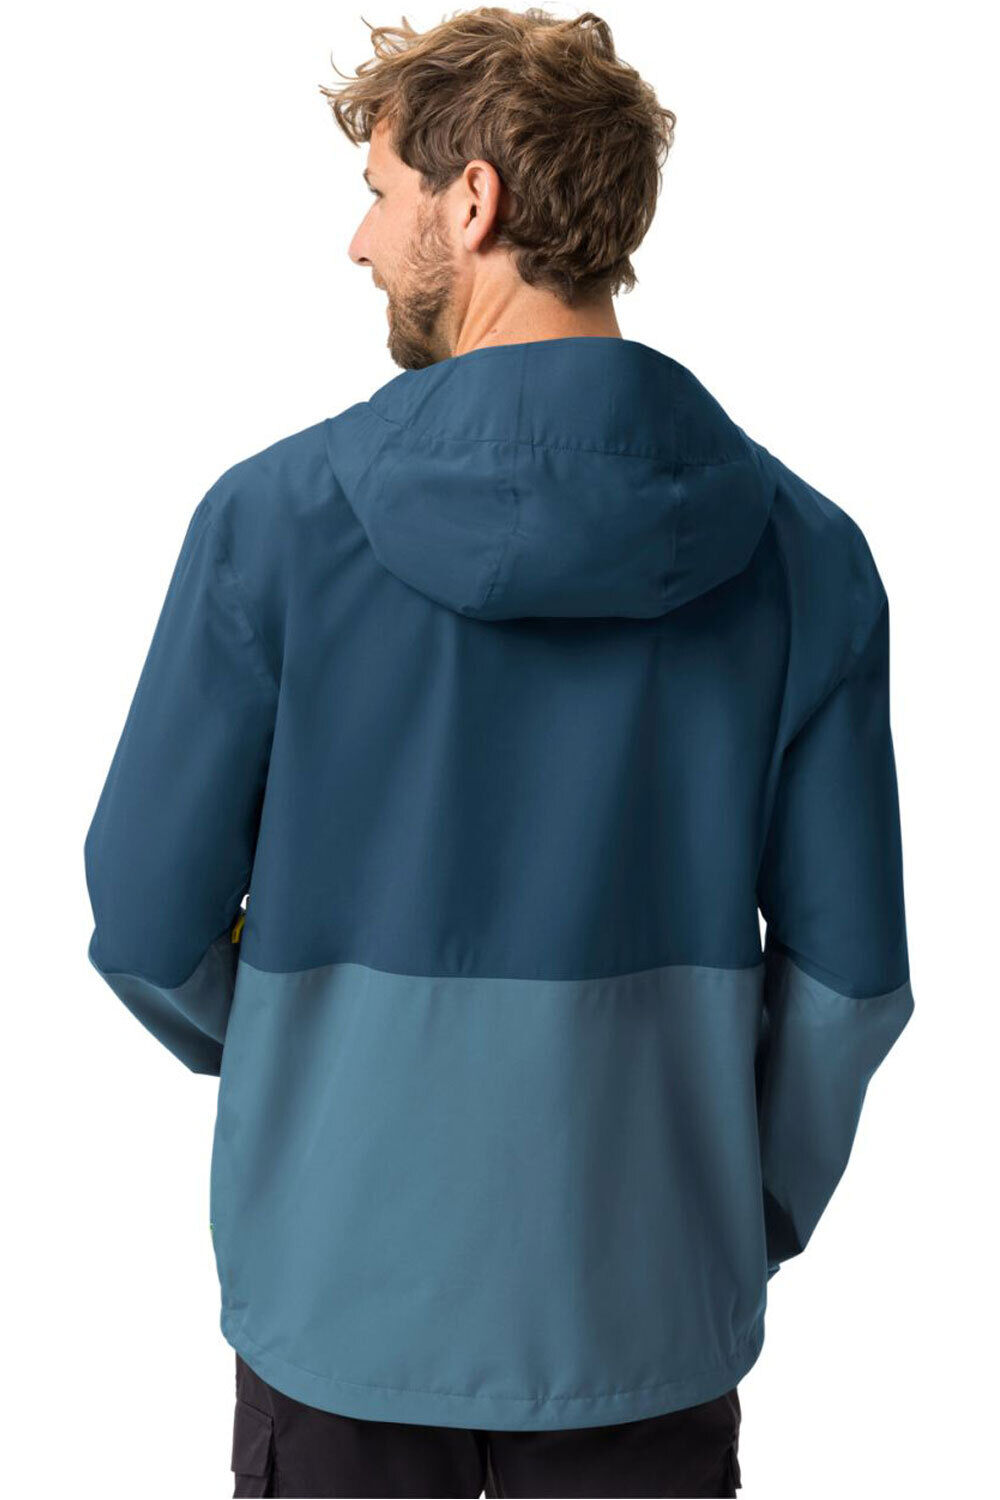 Vaude chaqueta impermeable hombre Men's Neyland 2.5L Jacket vista trasera